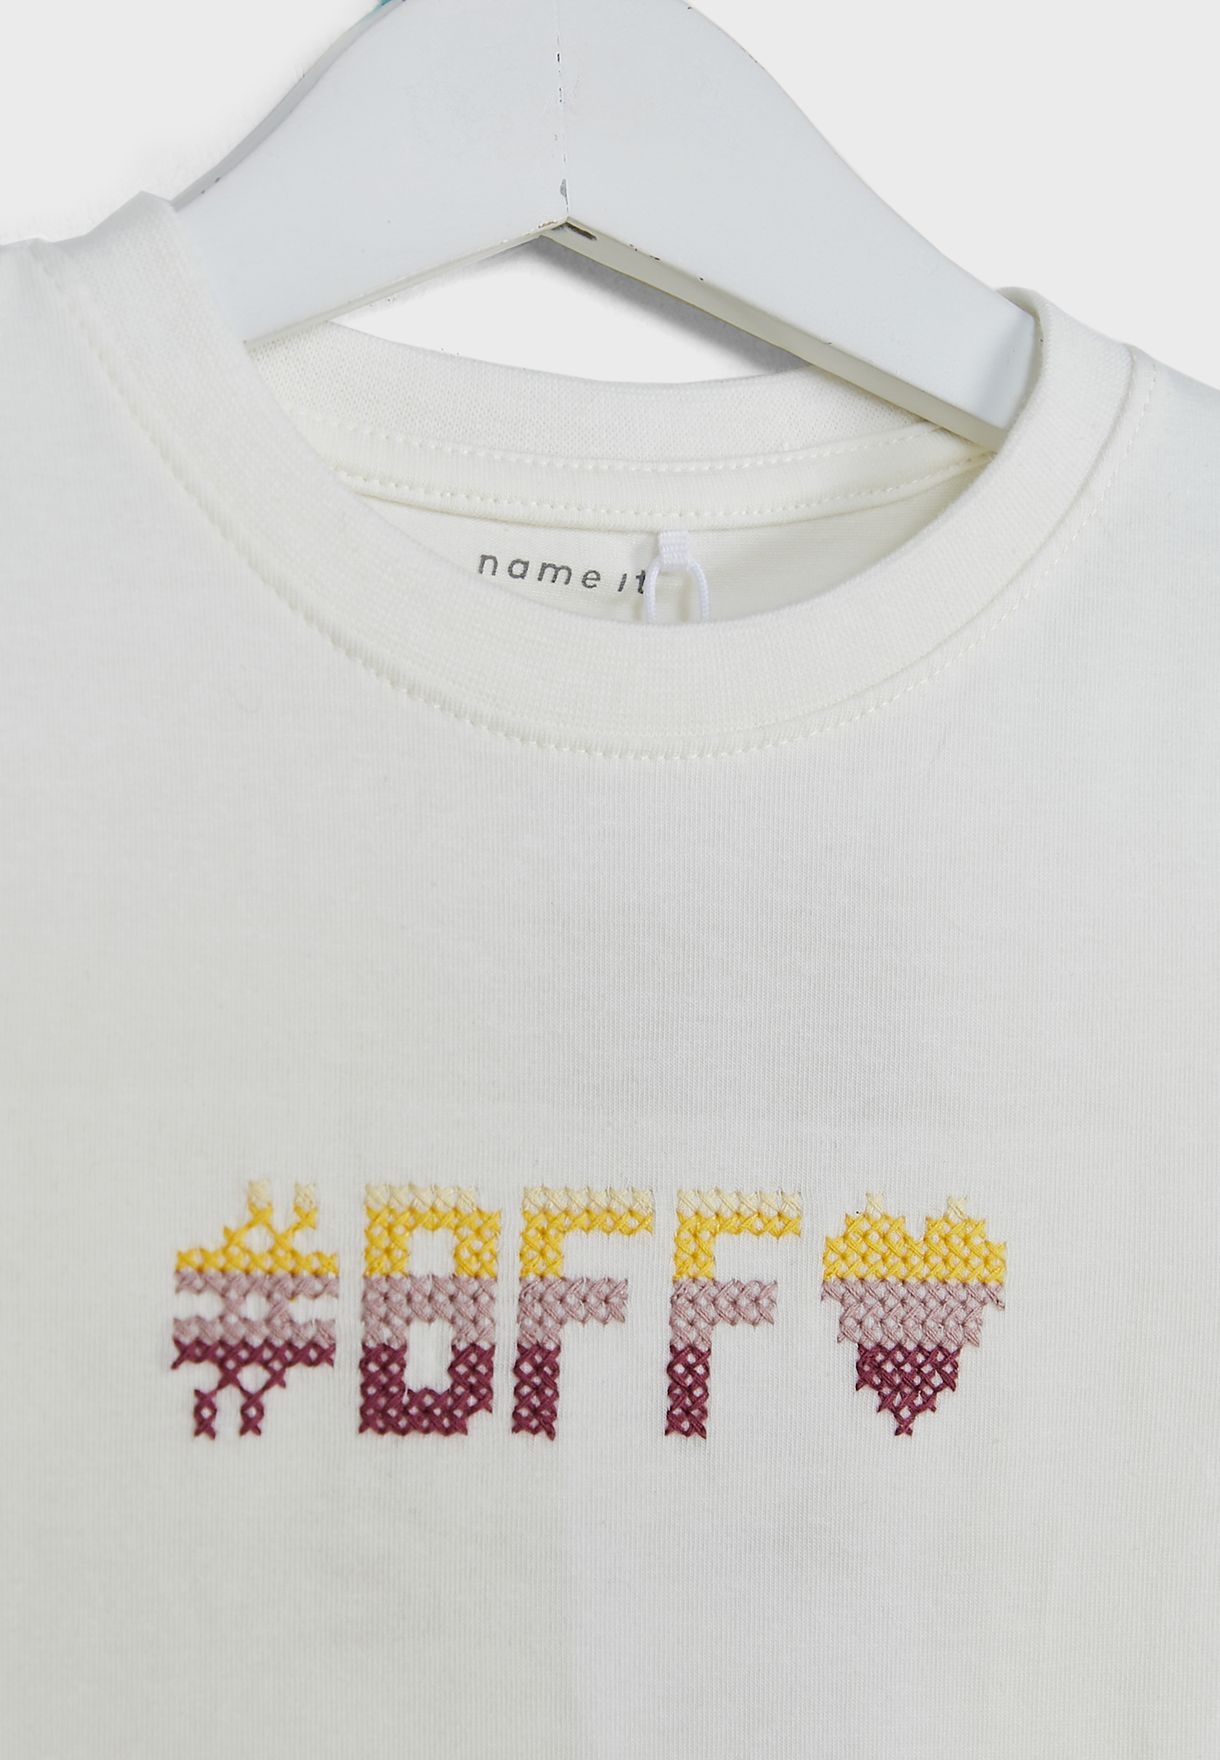 Kids Bff T-Shirt